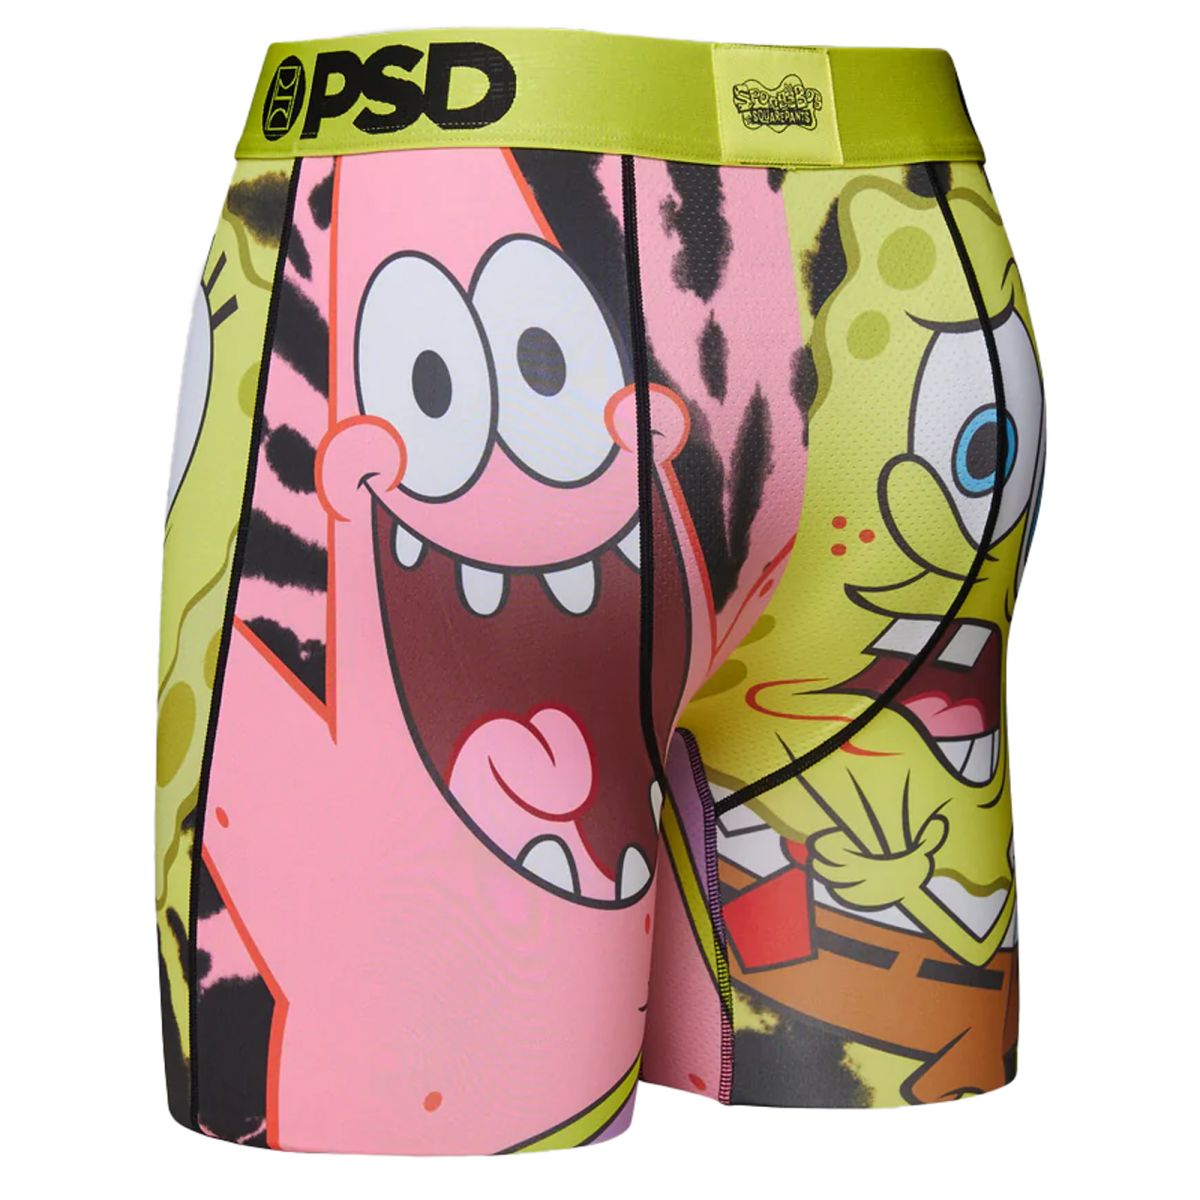 PSD SpongeBob SquarePants Stretch Boxer Briefs - Men's